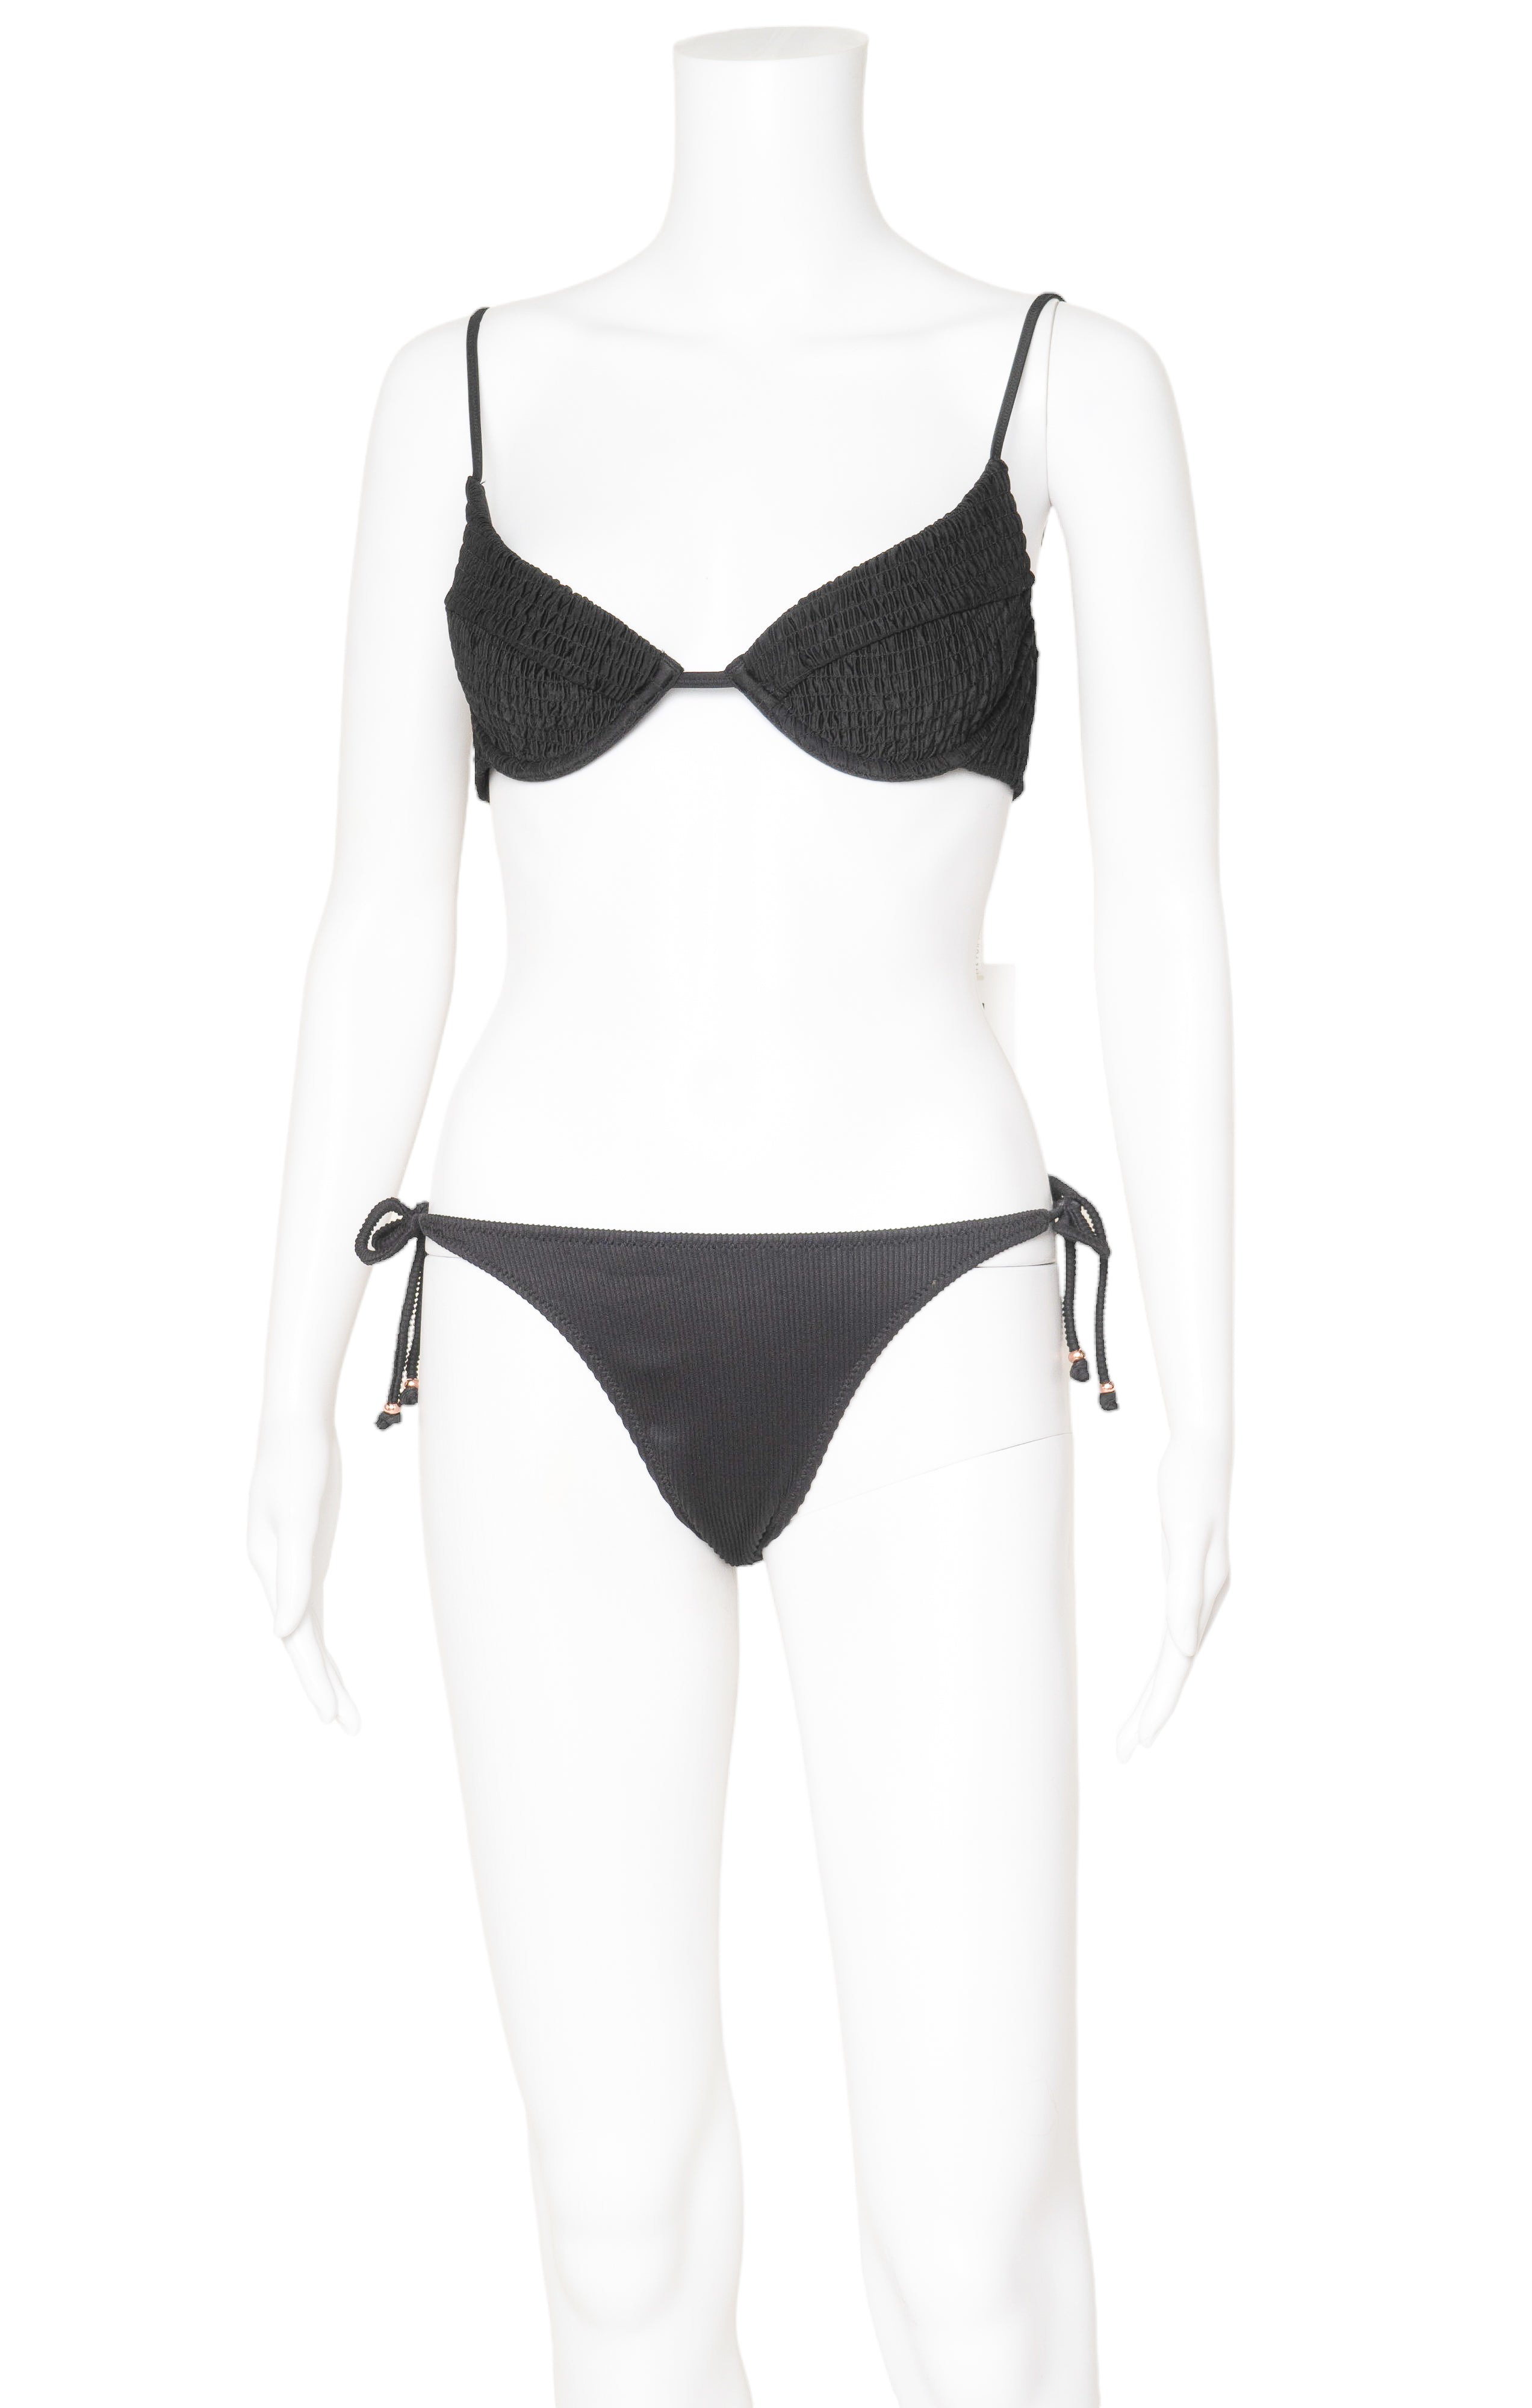 WHITE FOX SWIM (NEW) with tags 3- Piece Bikini Set Size: Top - M, Bottoms - L